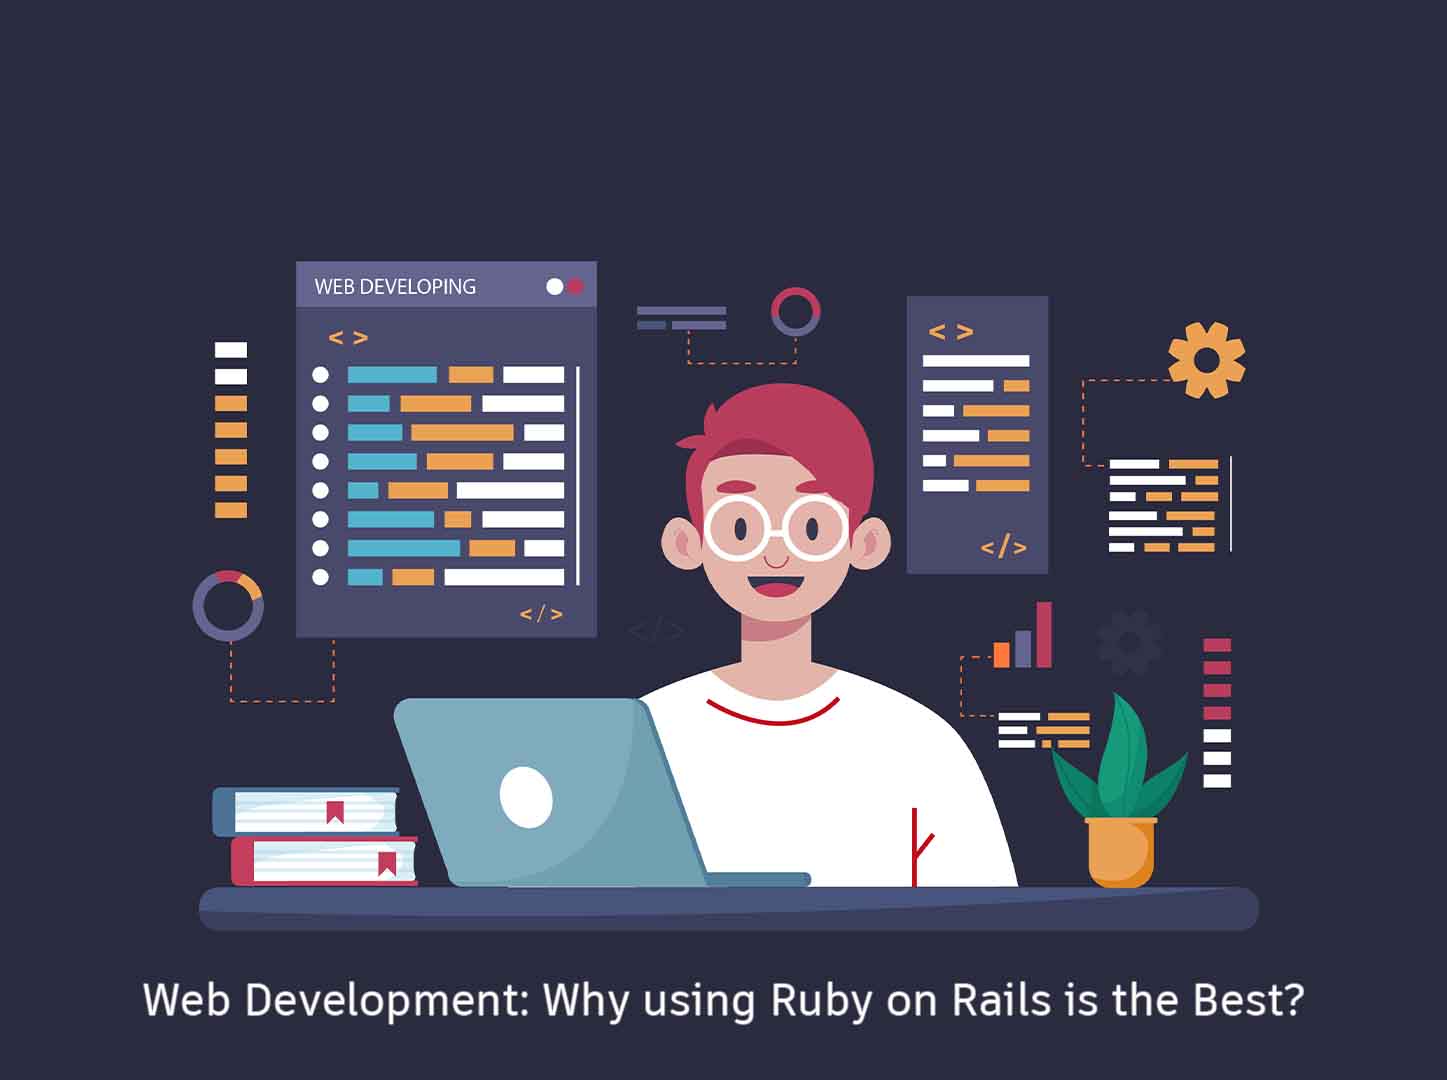 Ruby on Rails software development